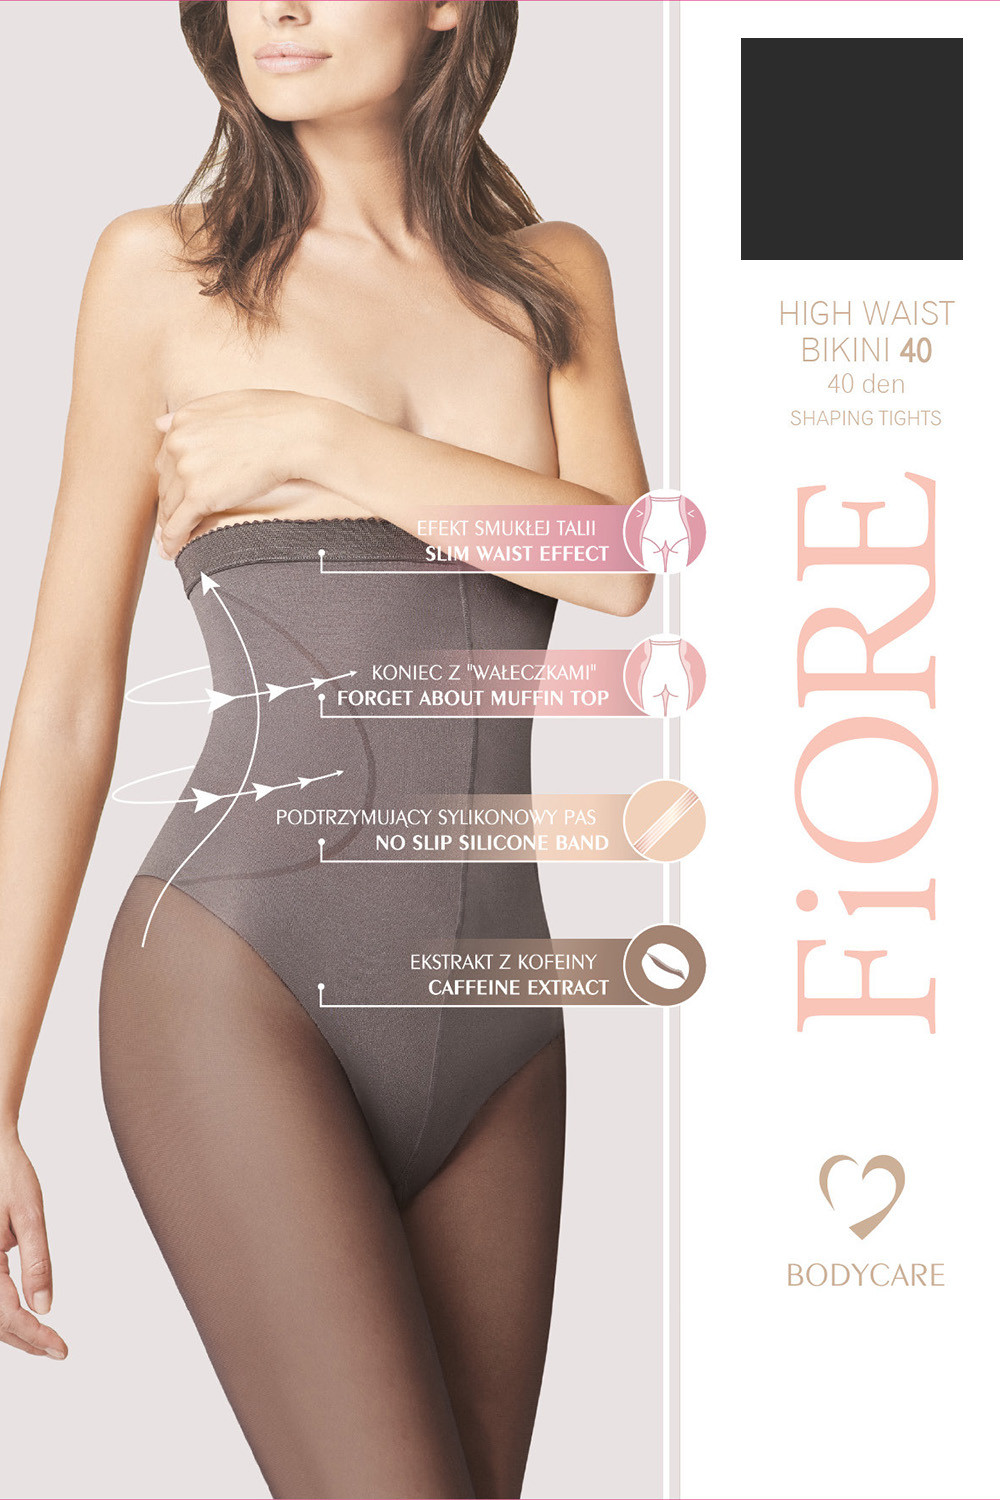 Fiore High Waist Bikini 40 den M5219 kolor:black 4-L